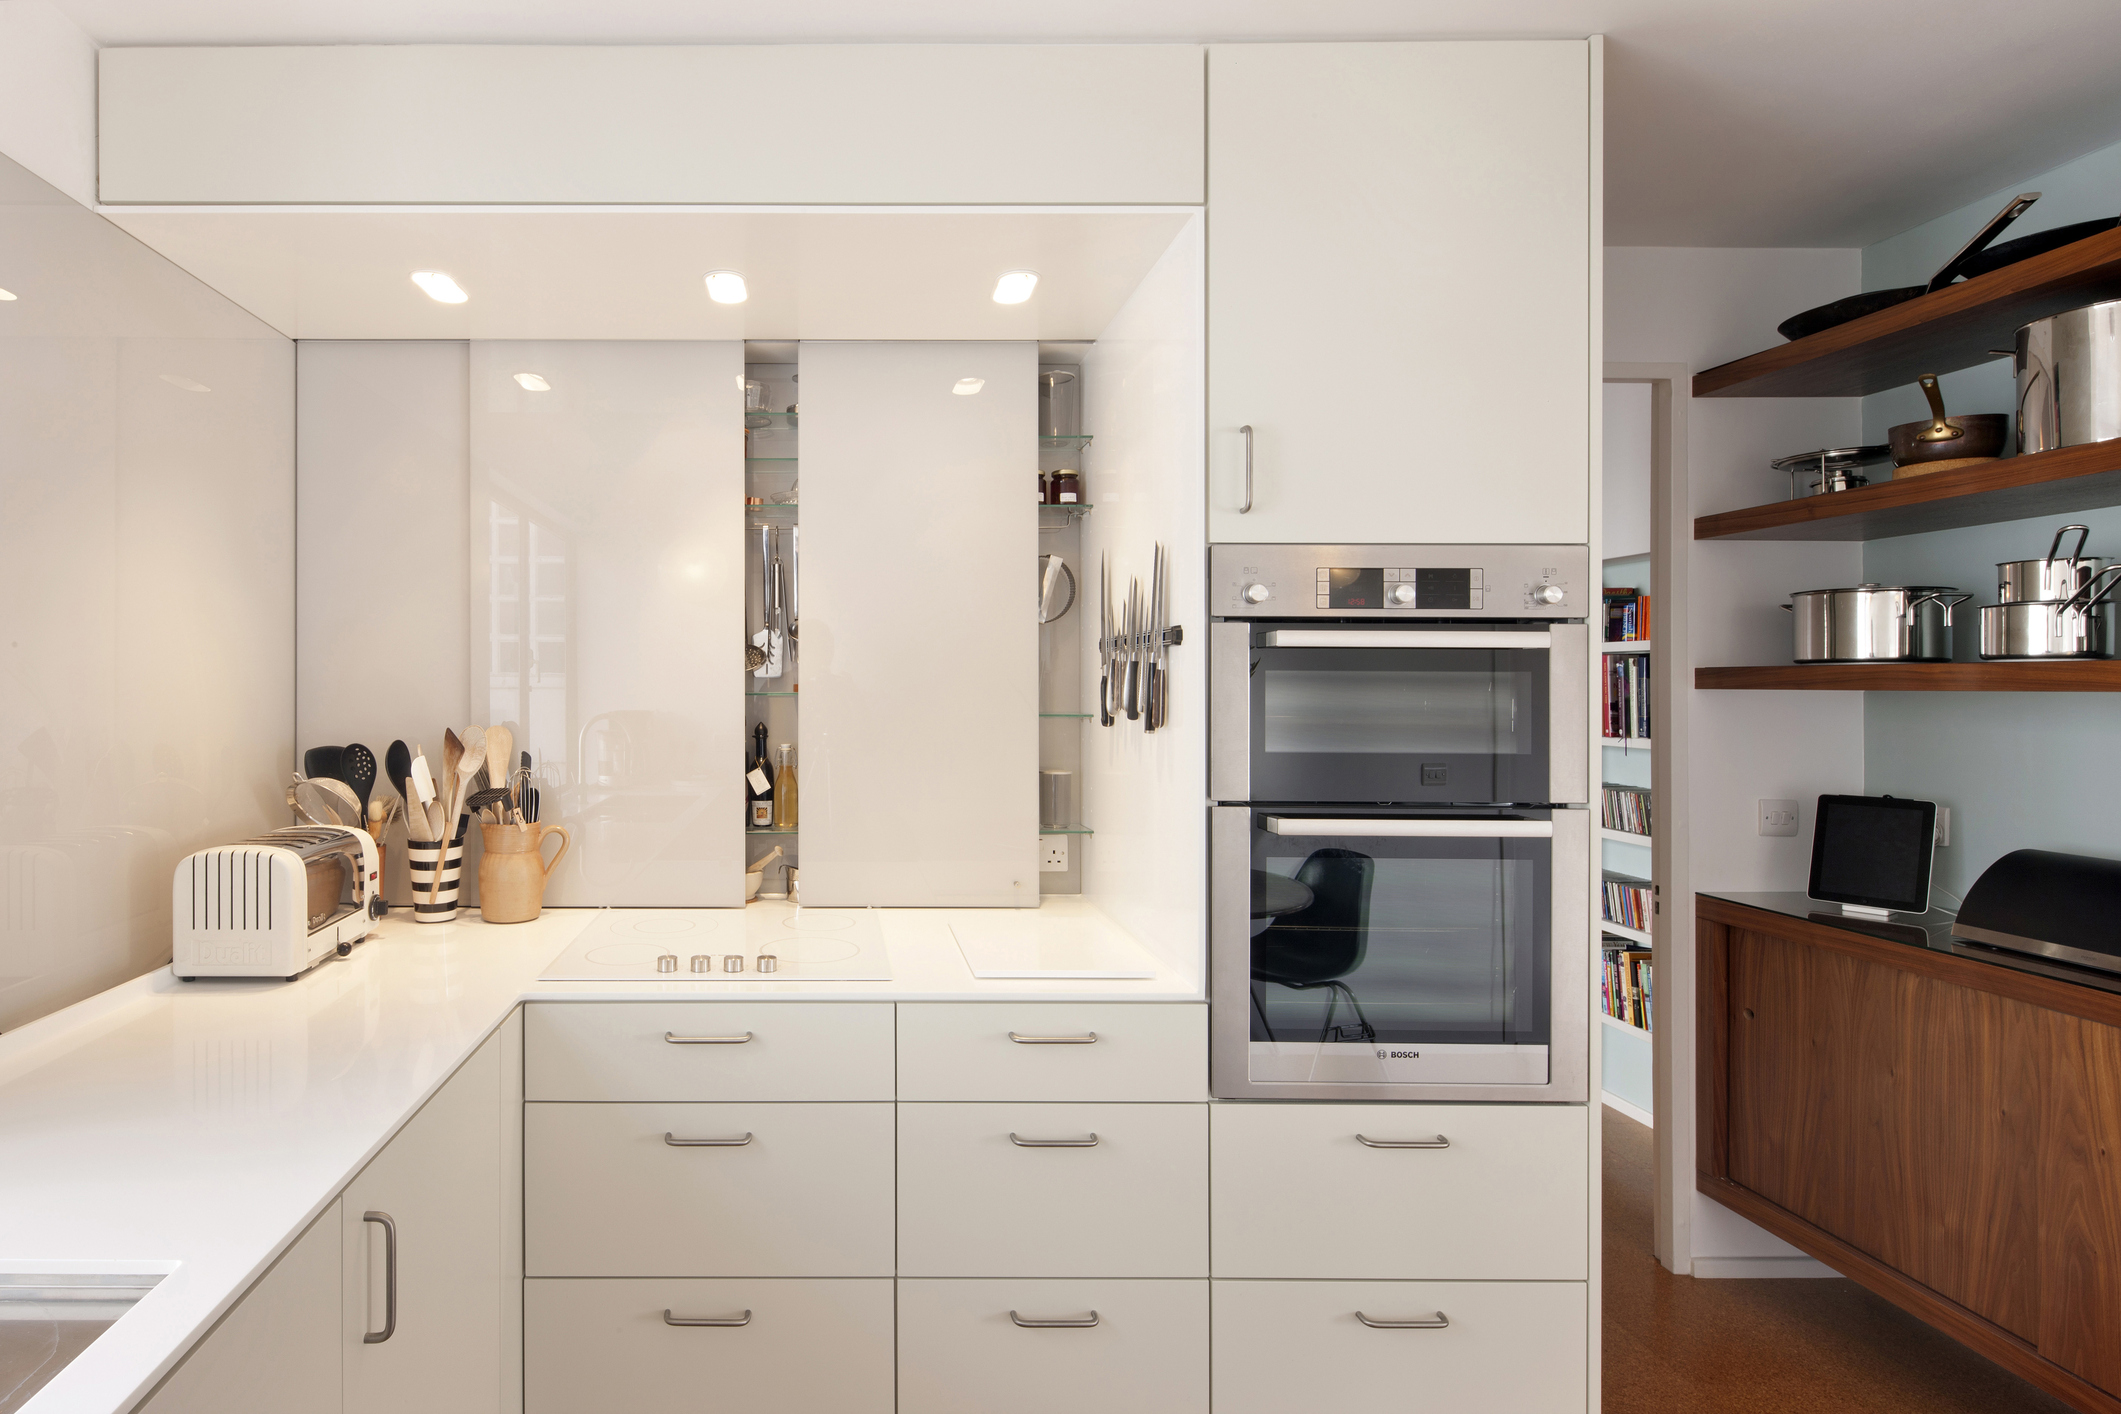 Kitchen with sliding panels hiding appliances